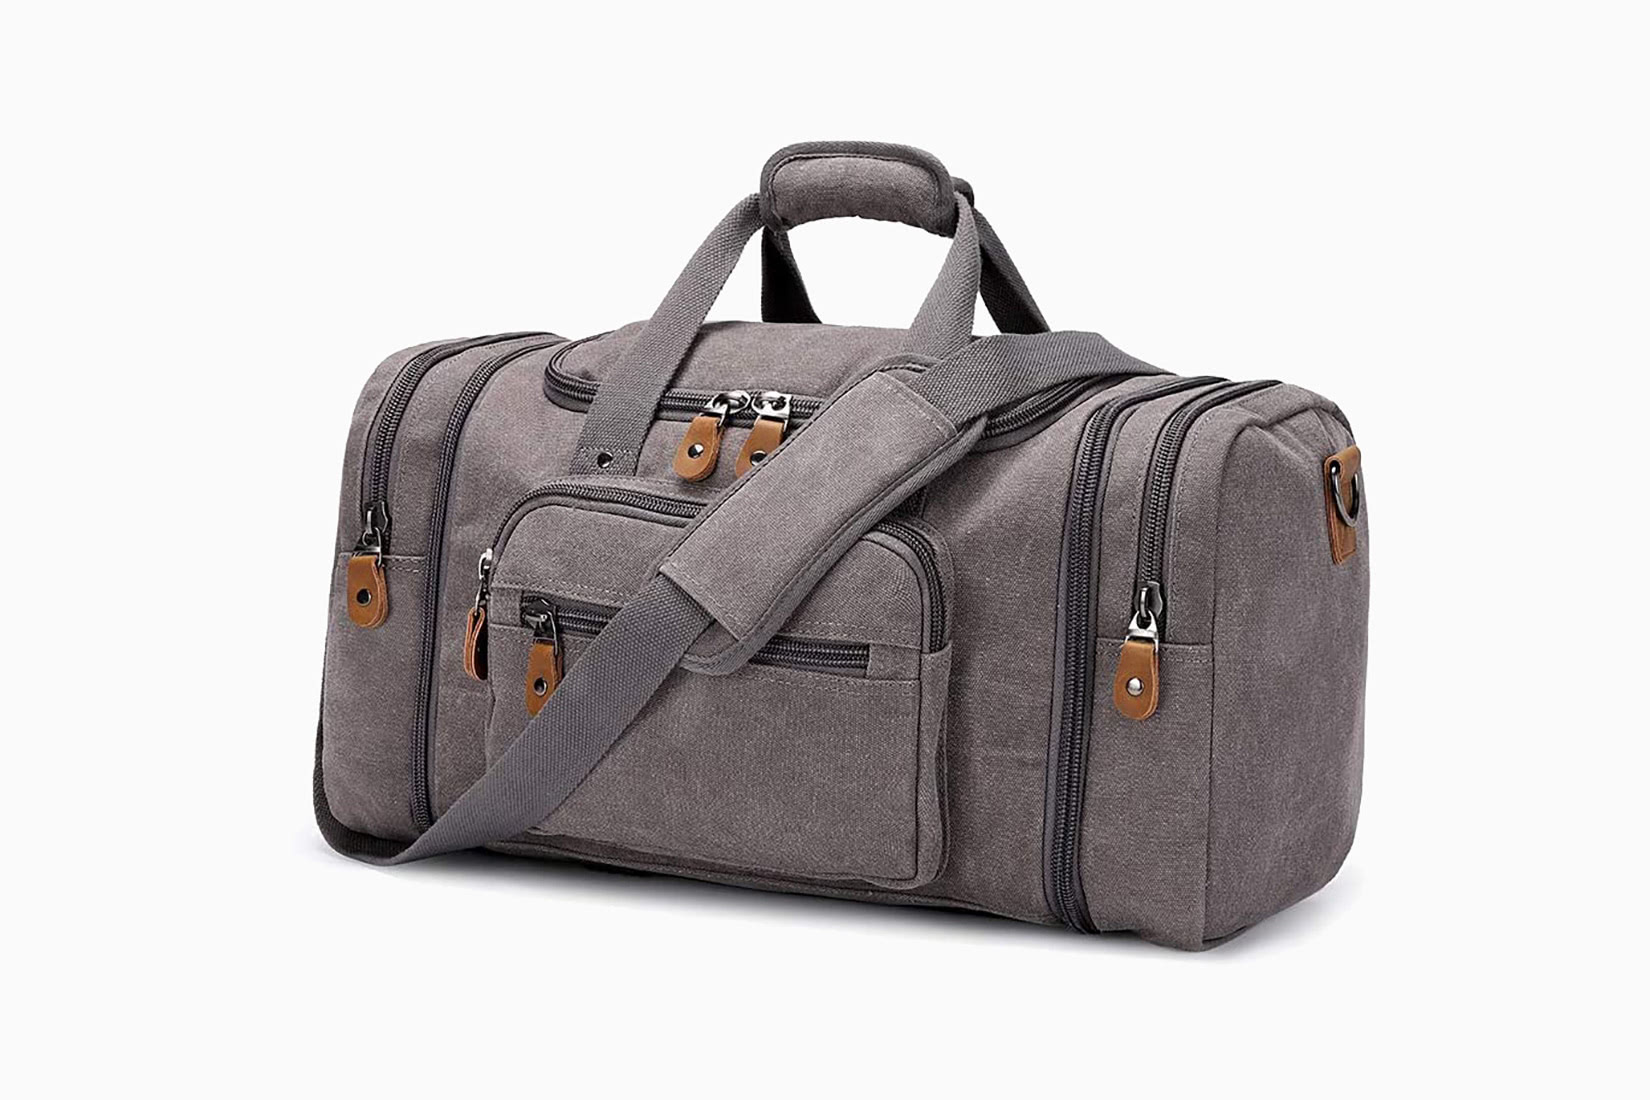 best duffel bags laptop plambag - Luxe Digital